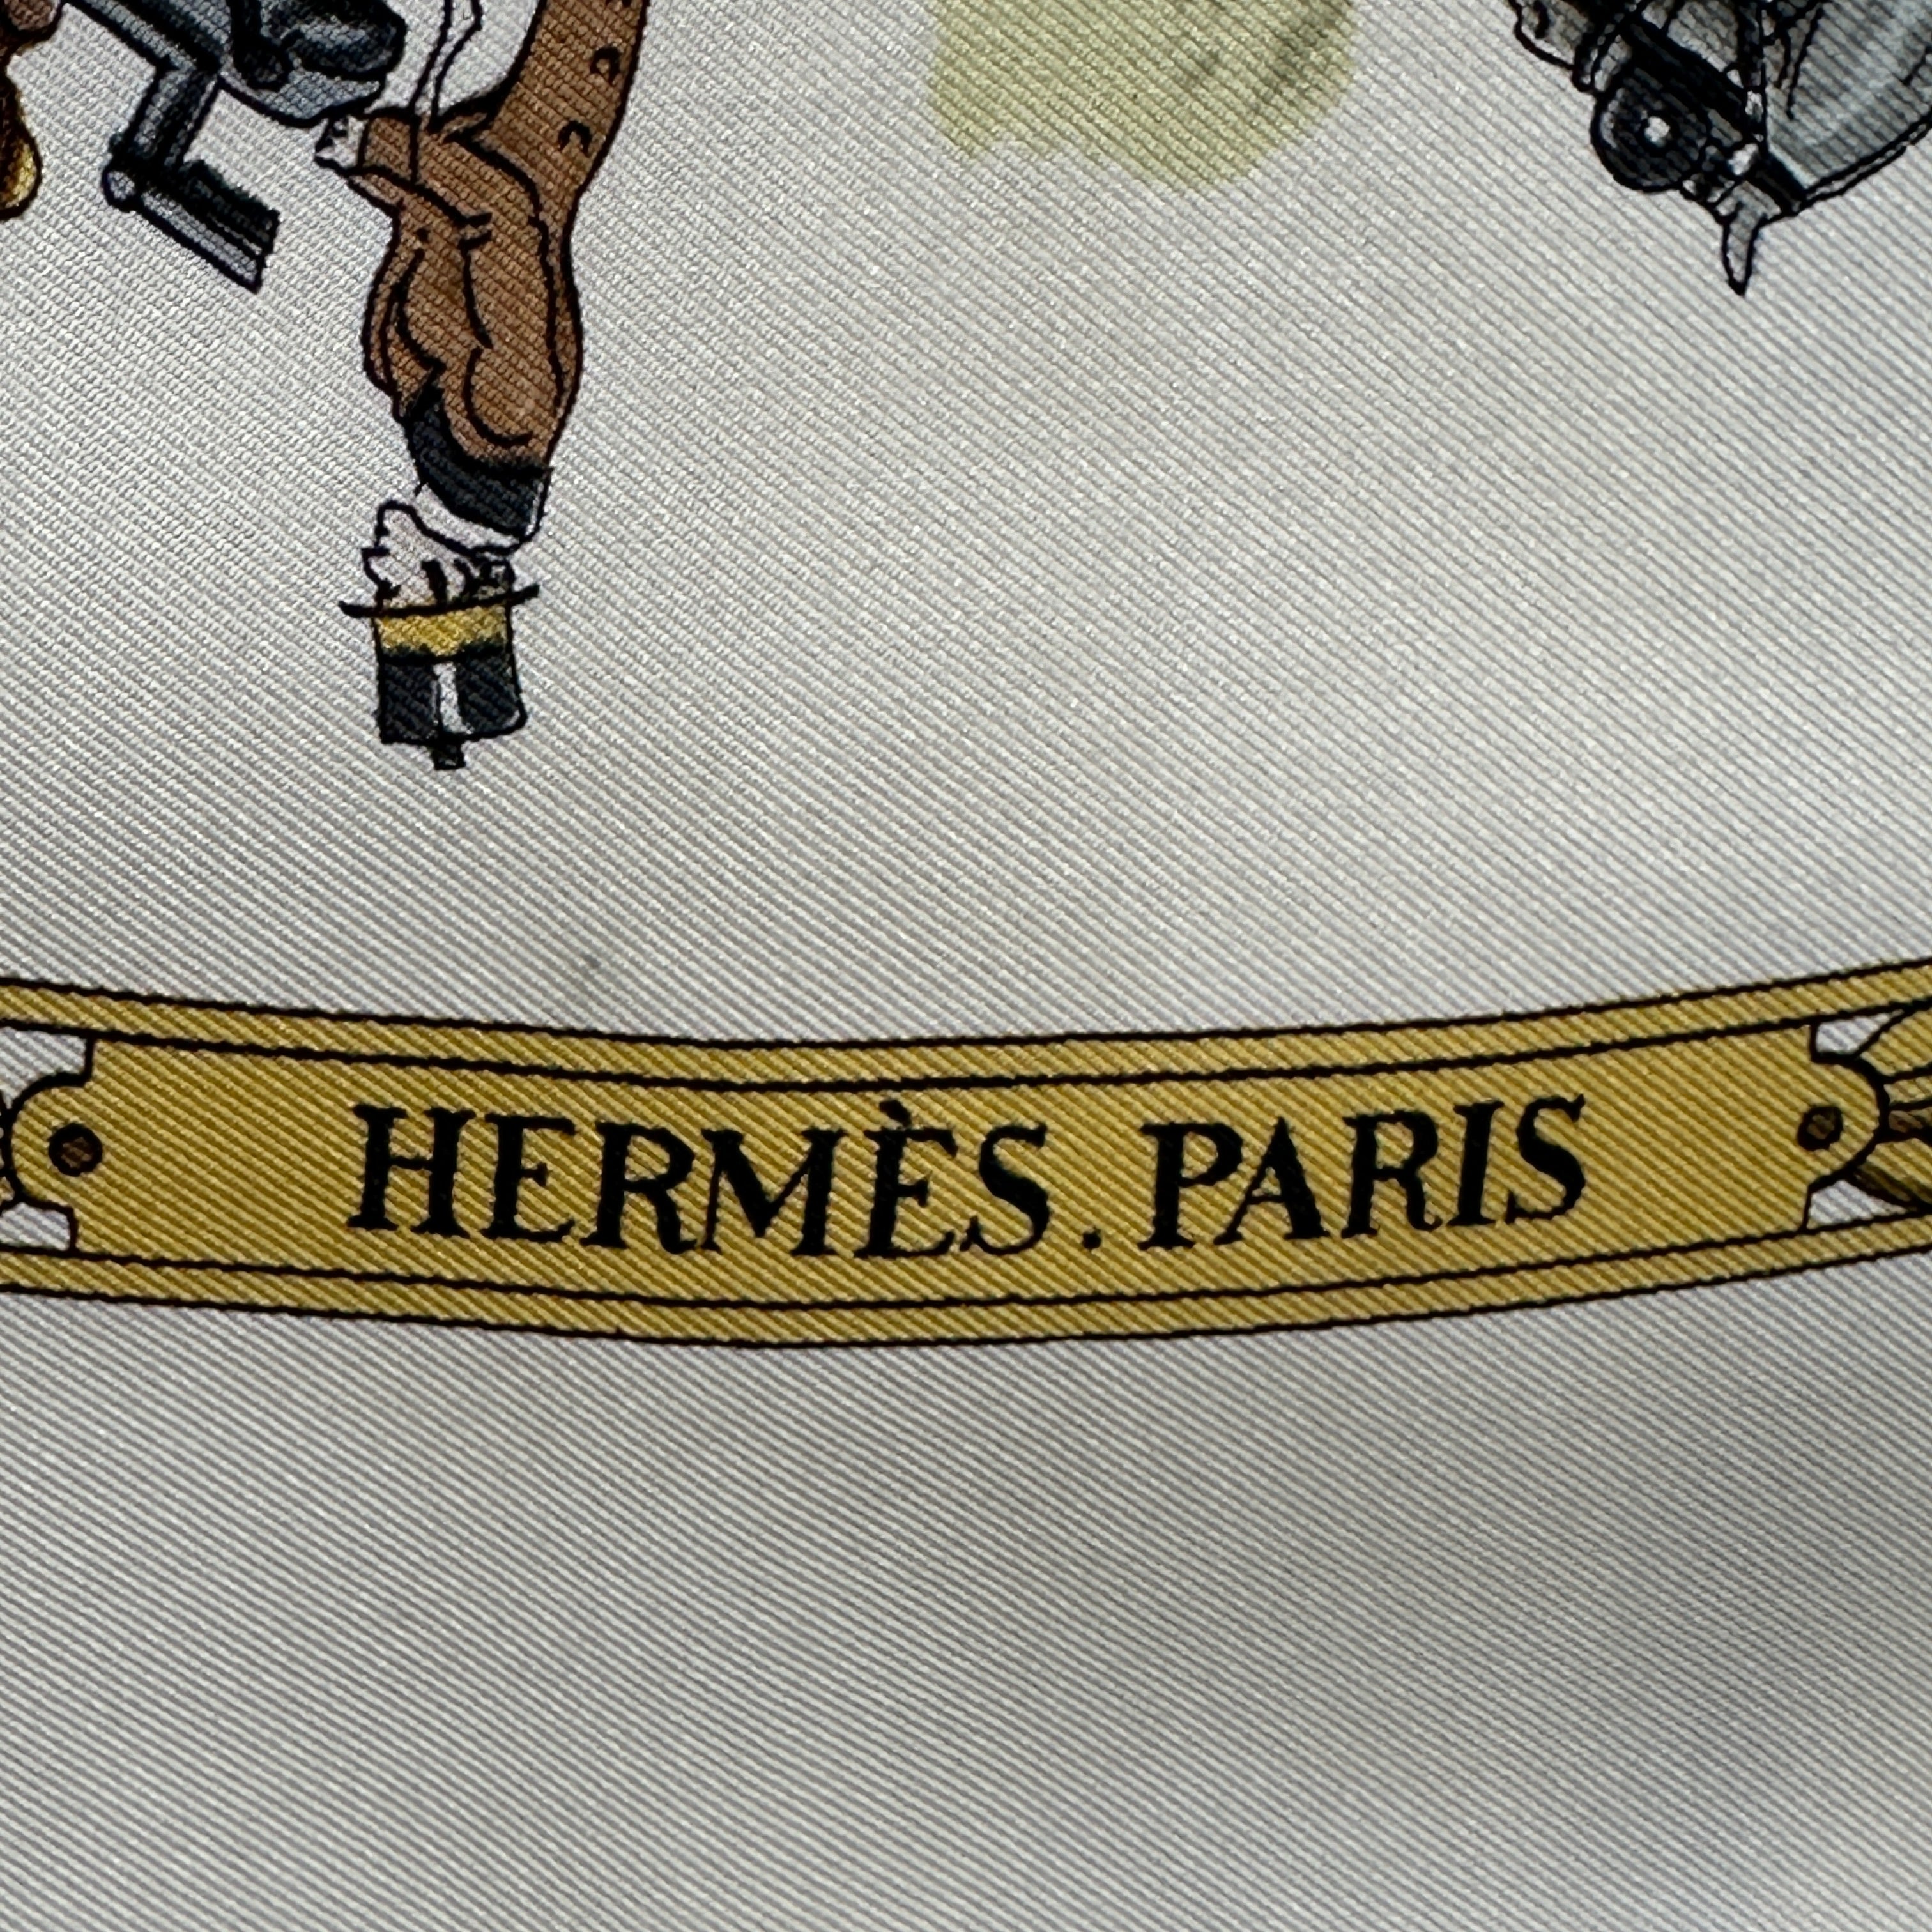 signature-hermes-paris-foulard-promenade-de-longchamp